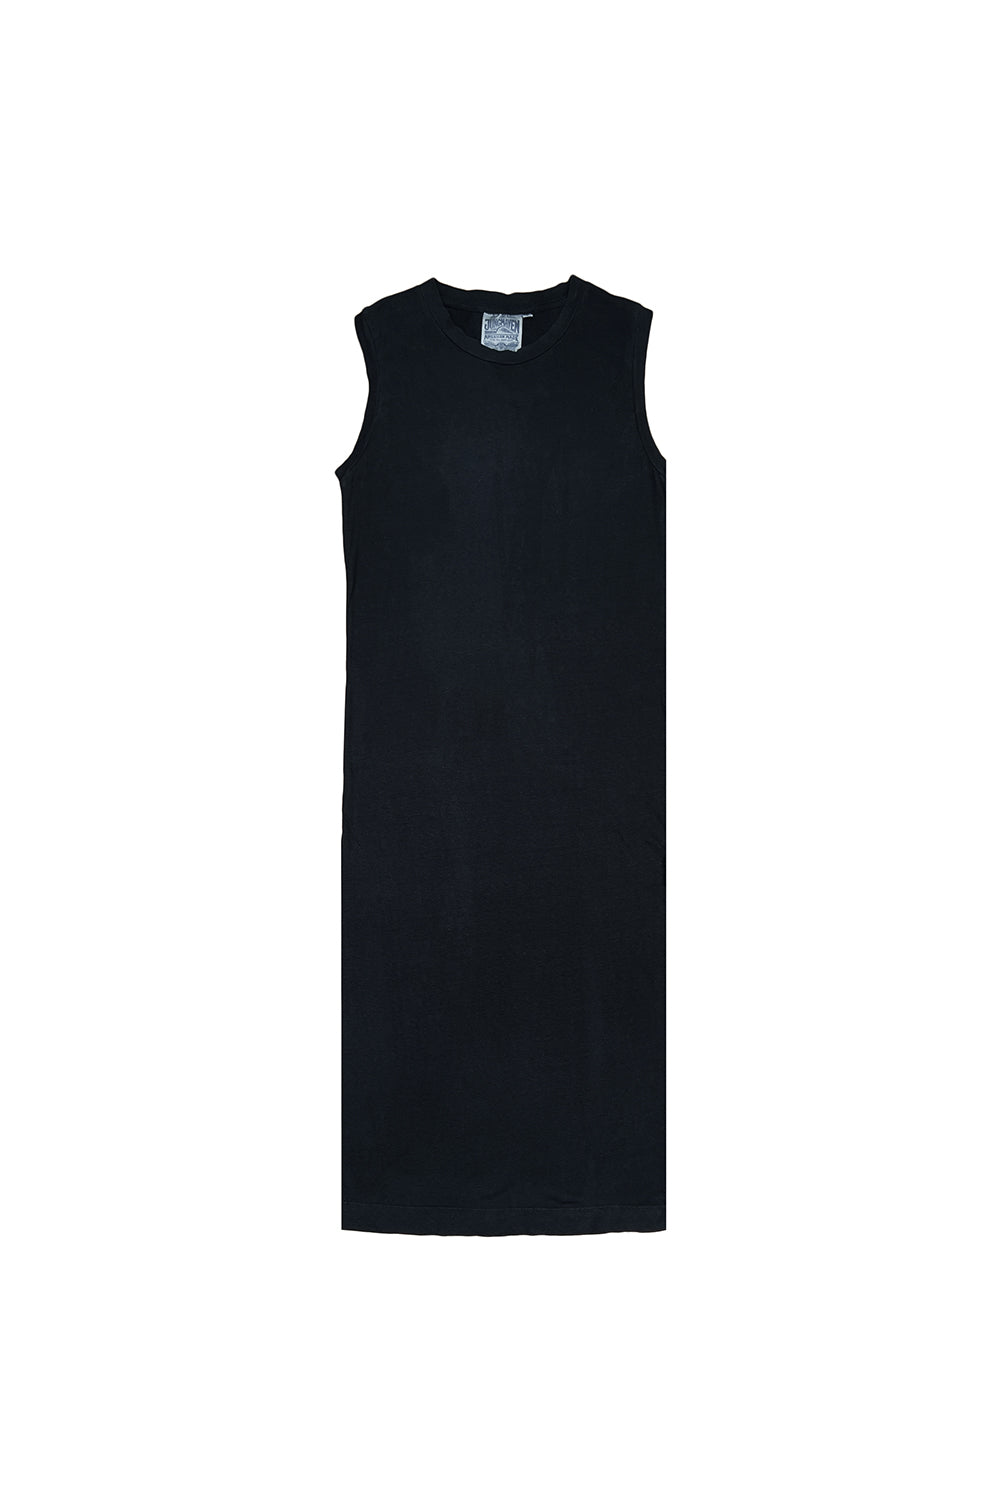 Hermosa Dress | Jungmaven Hemp Clothing & Accessories / Color: Black